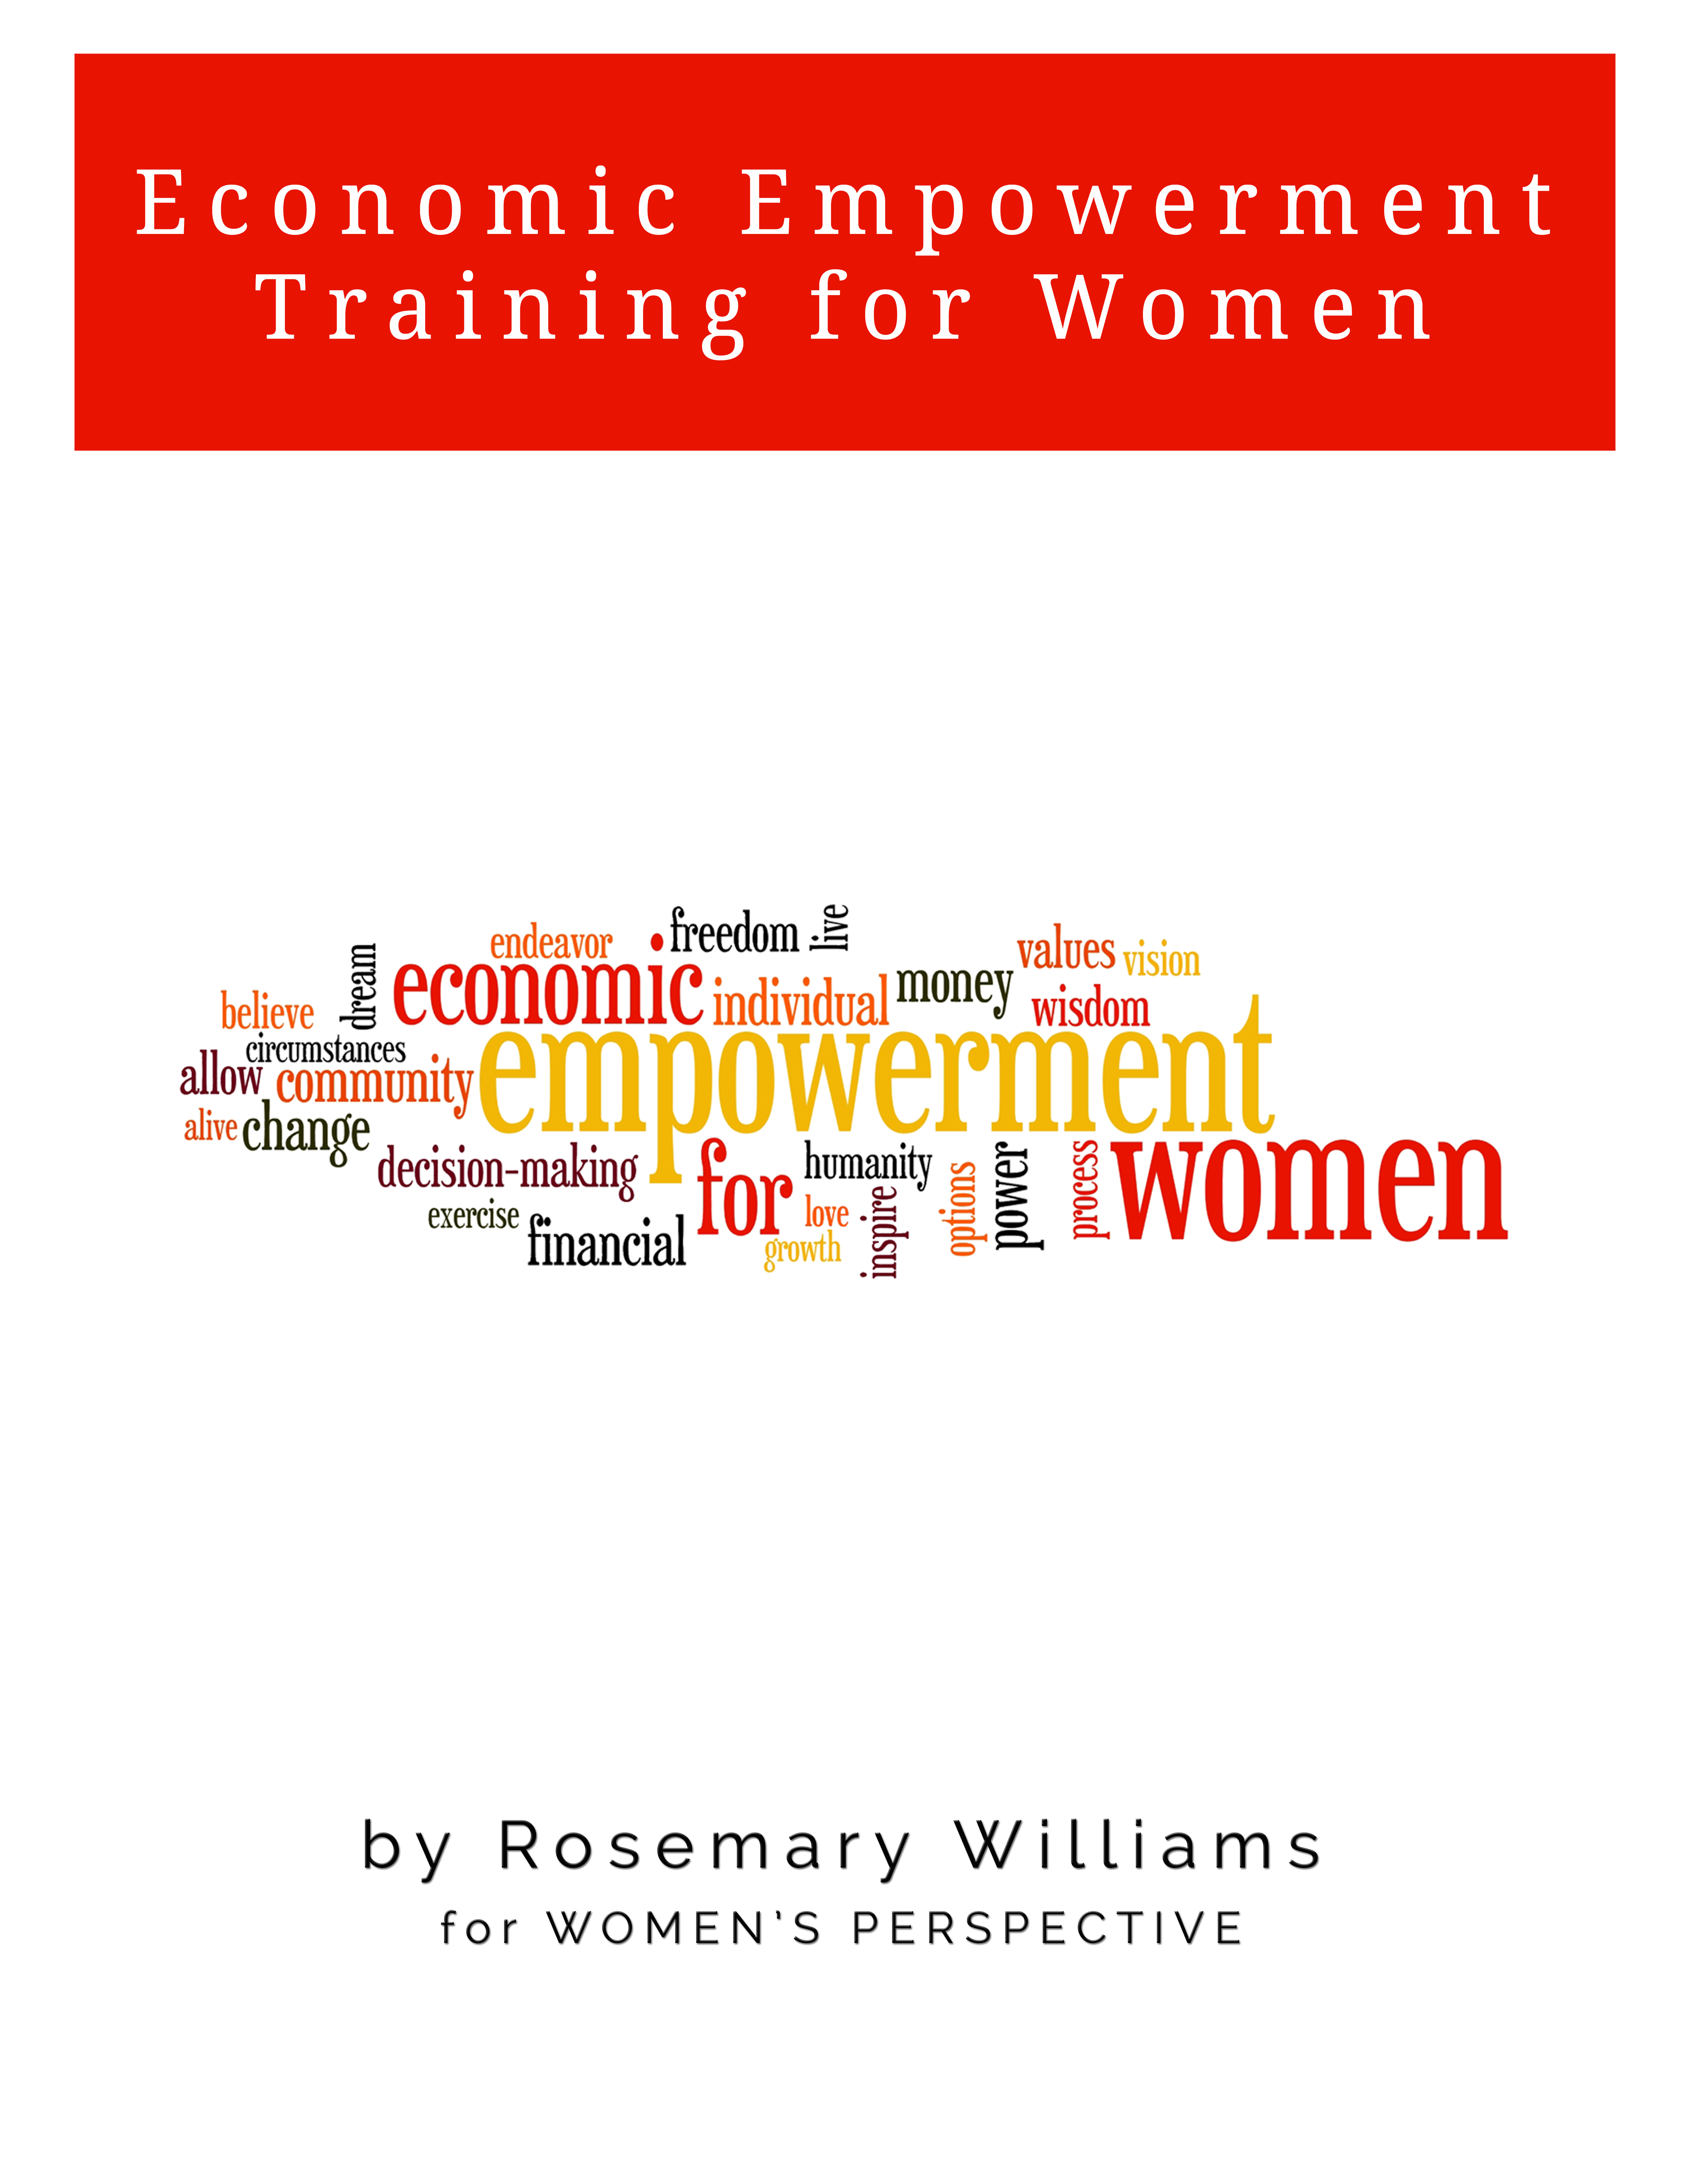 Women's Perspective - Rosemary Williams Logo